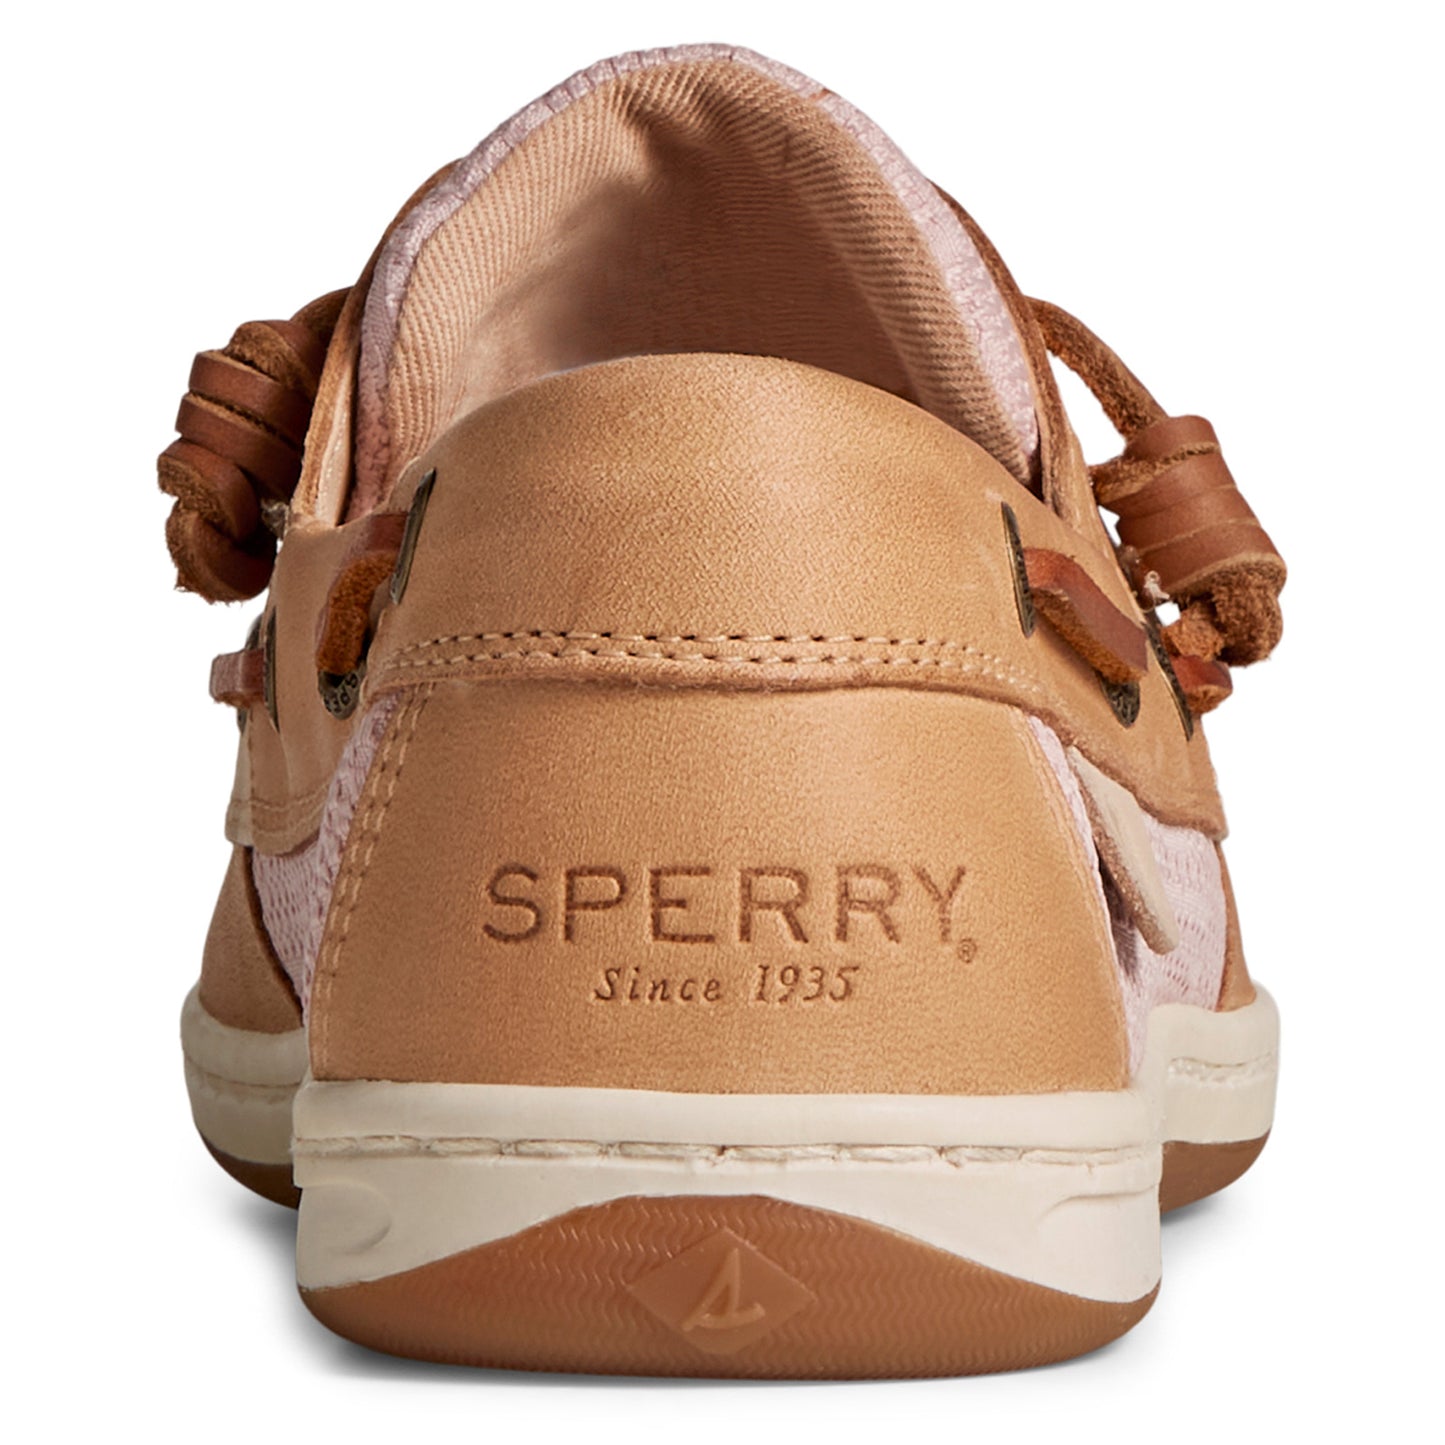 Peltz Shoes  Women's Sperry Songfish Boat Shoe tan / beige fabric STS88984